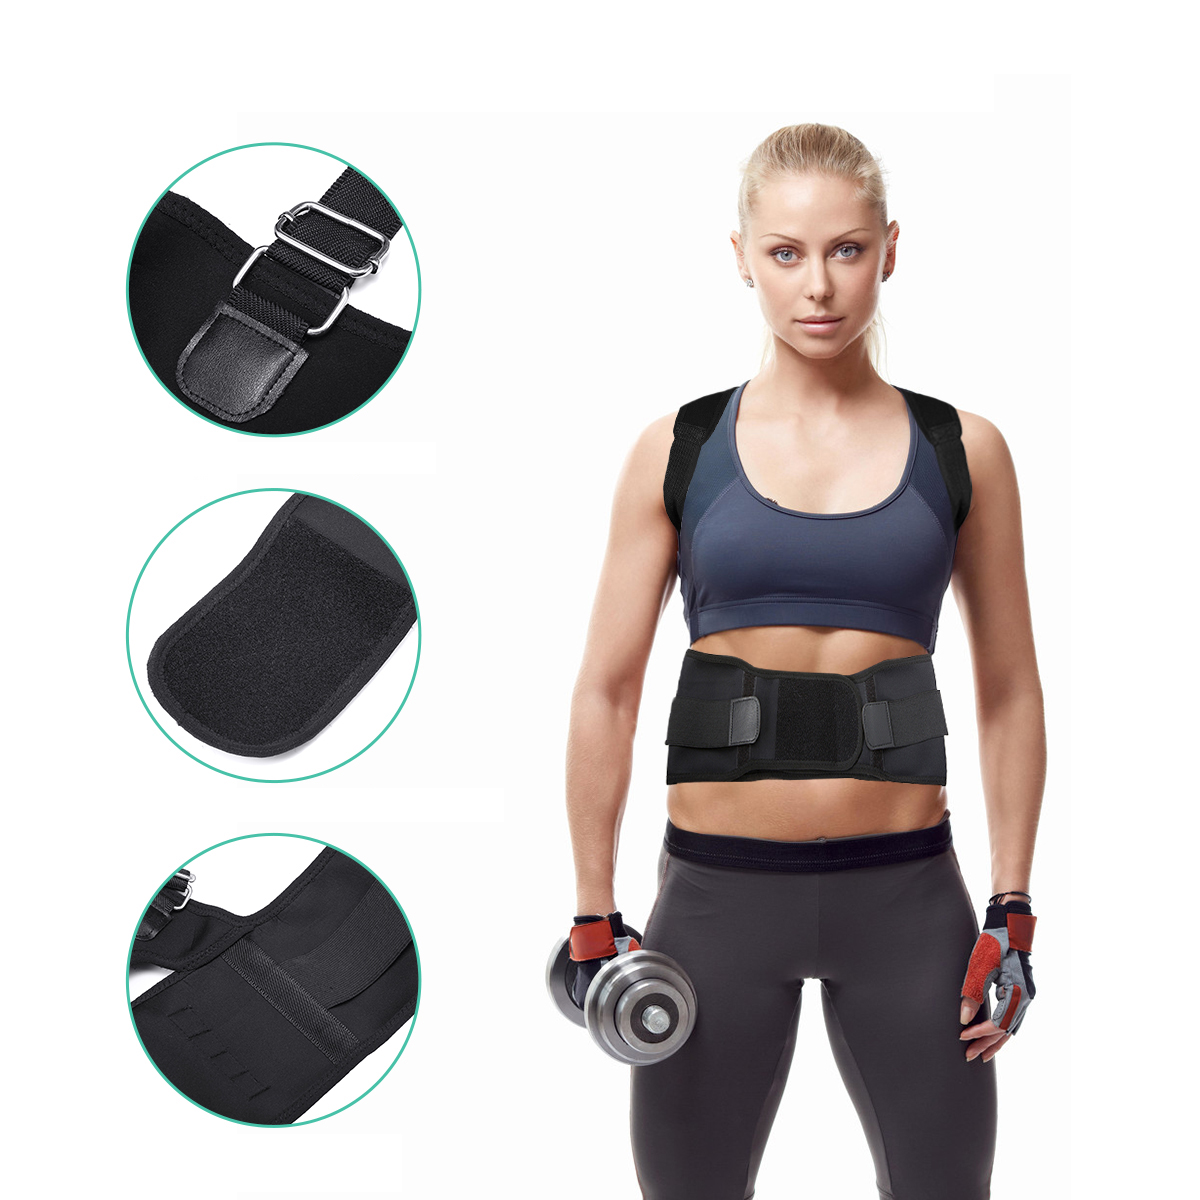 CHARMINERreg-Back-Support-Straight-Posture-Corrector-Shoulder-Back-Trainer-Fitness-Protective-Gear-1419970-3